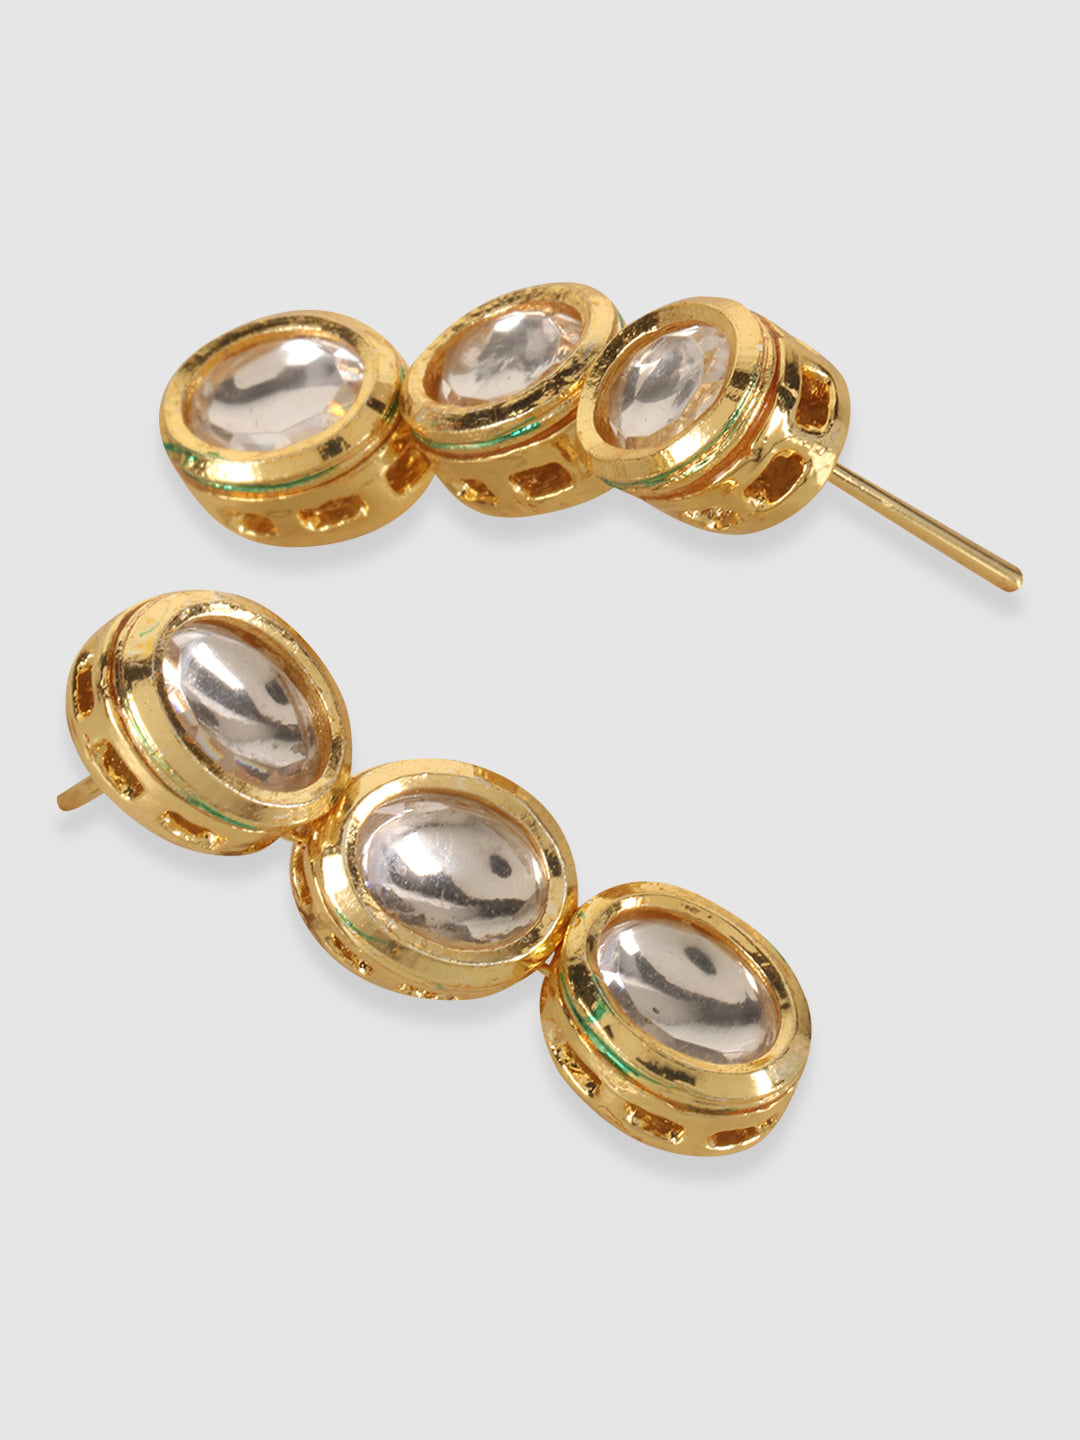 Gold-Toned Gold-Plated White Kundan-Studded Jewellery Set